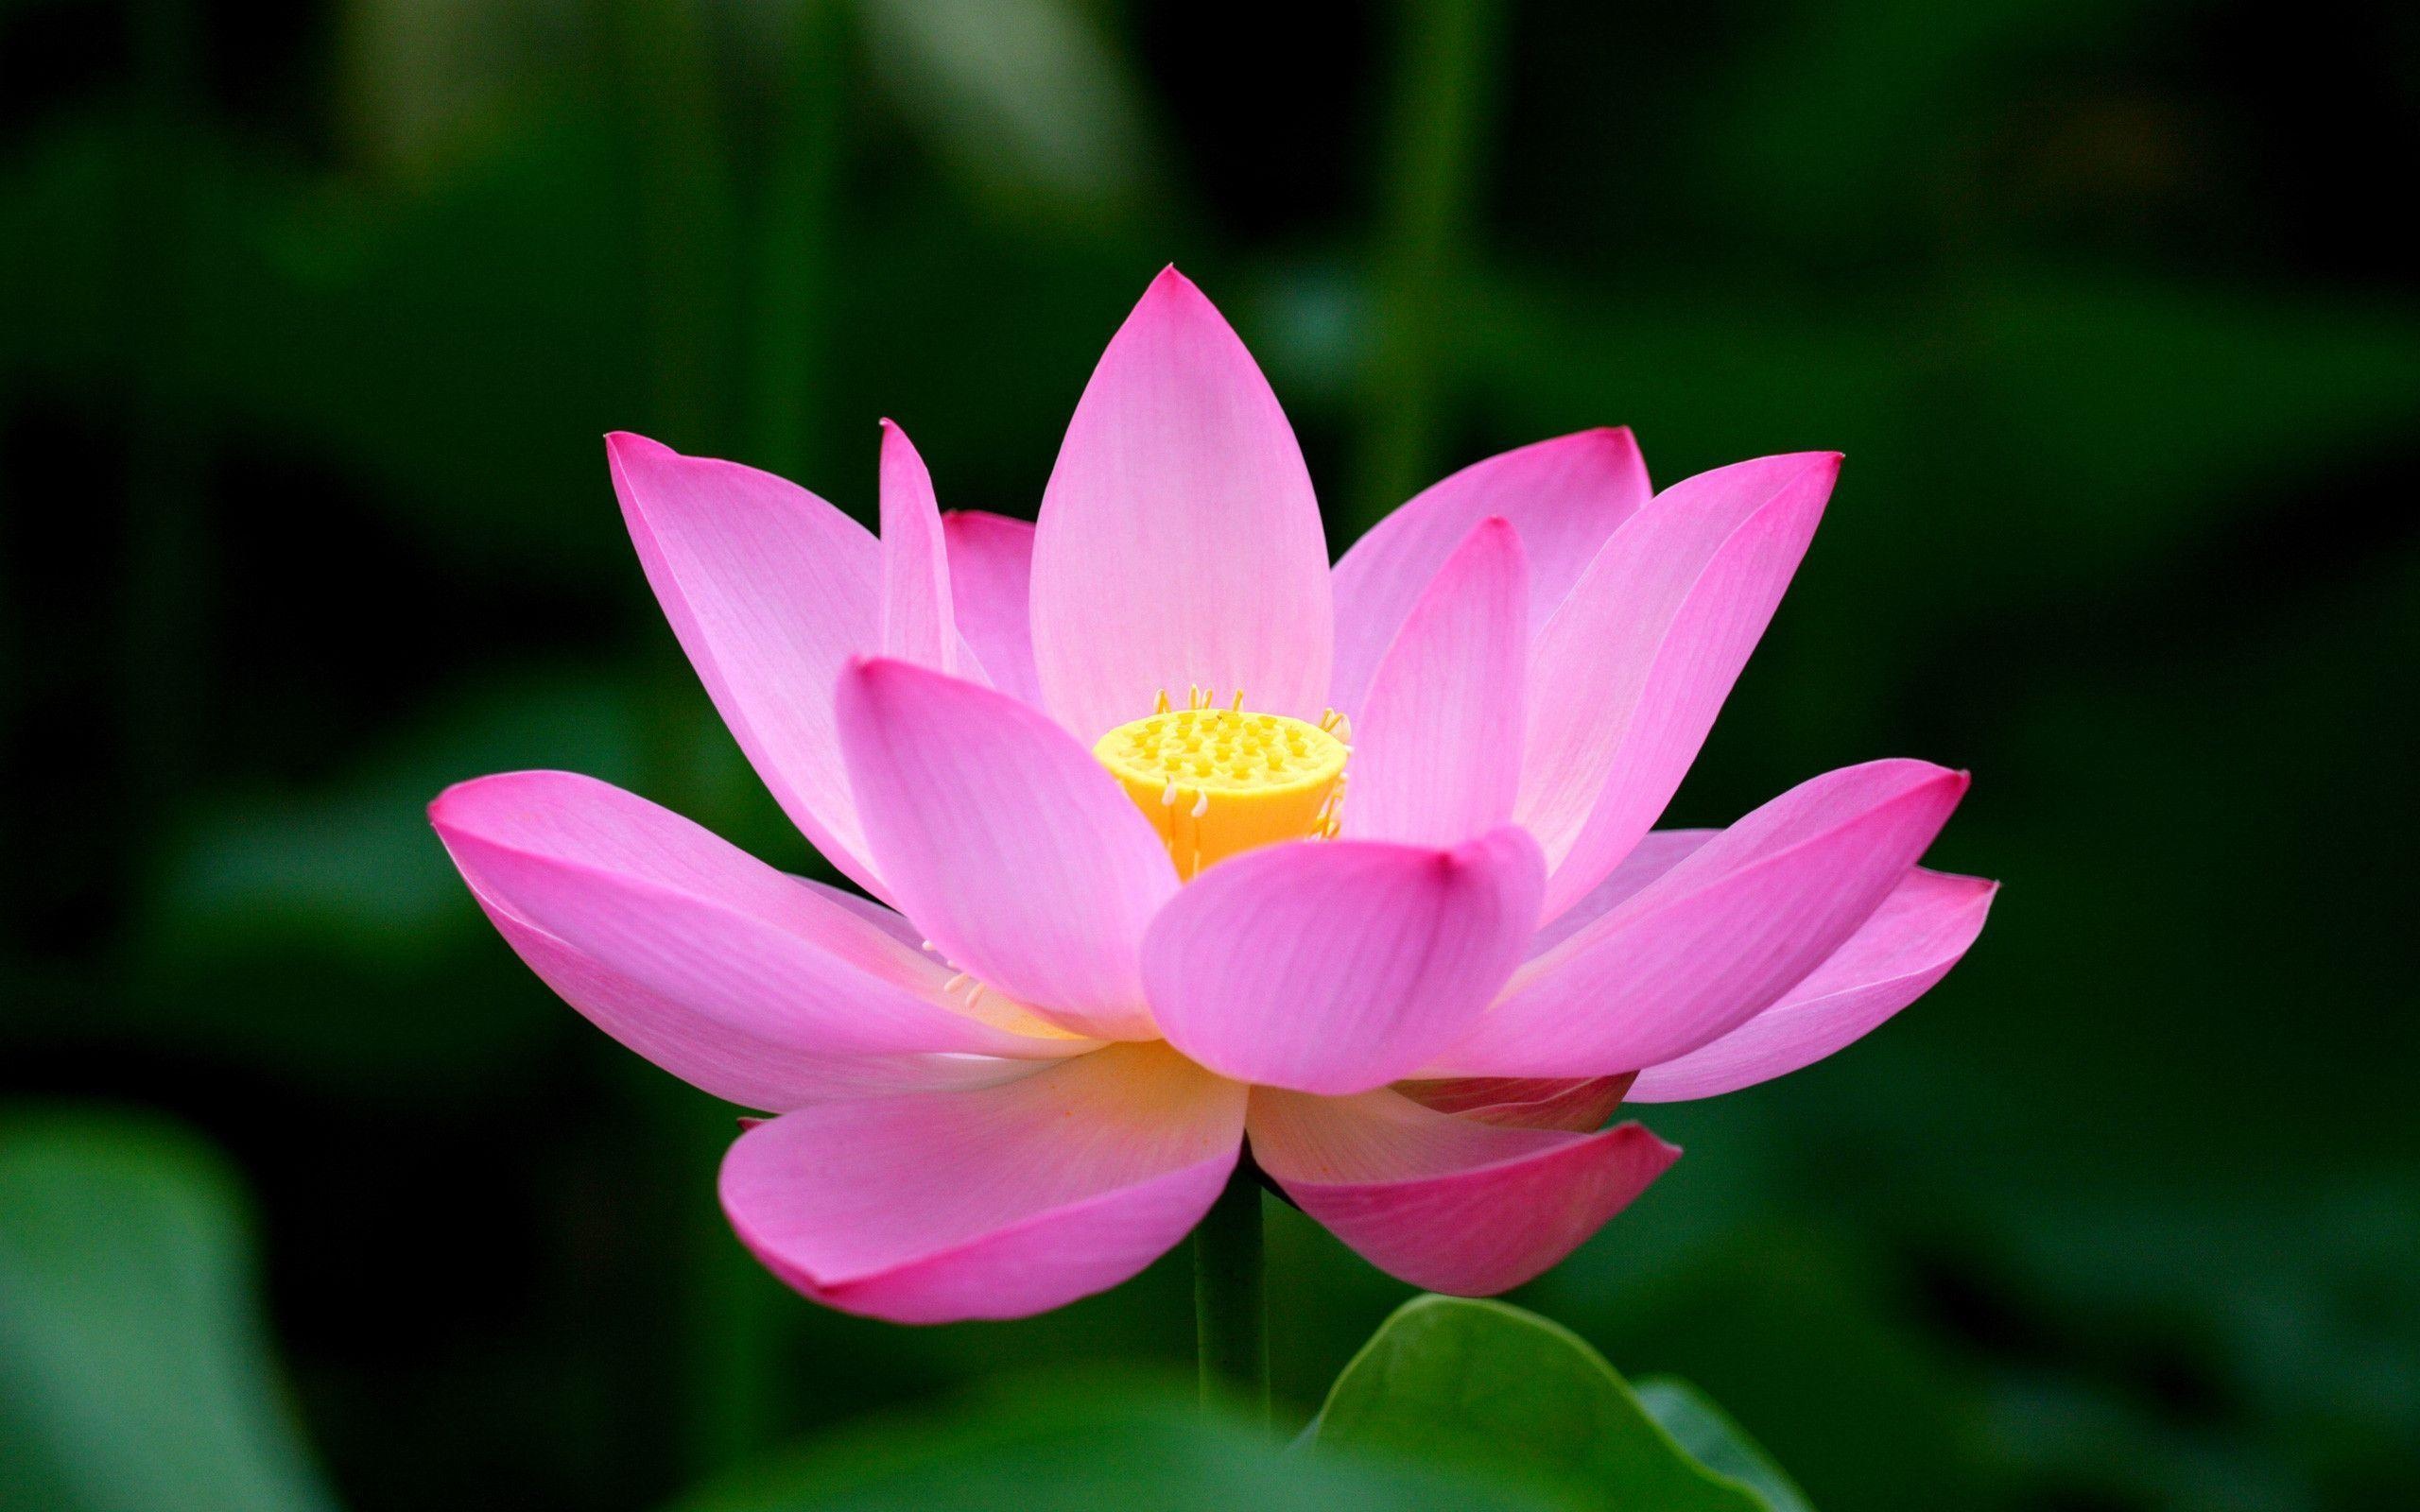 Lotus flower garden, Nature's beauty, Peaceful ambiance, Tranquil surroundings, 2560x1600 HD Desktop